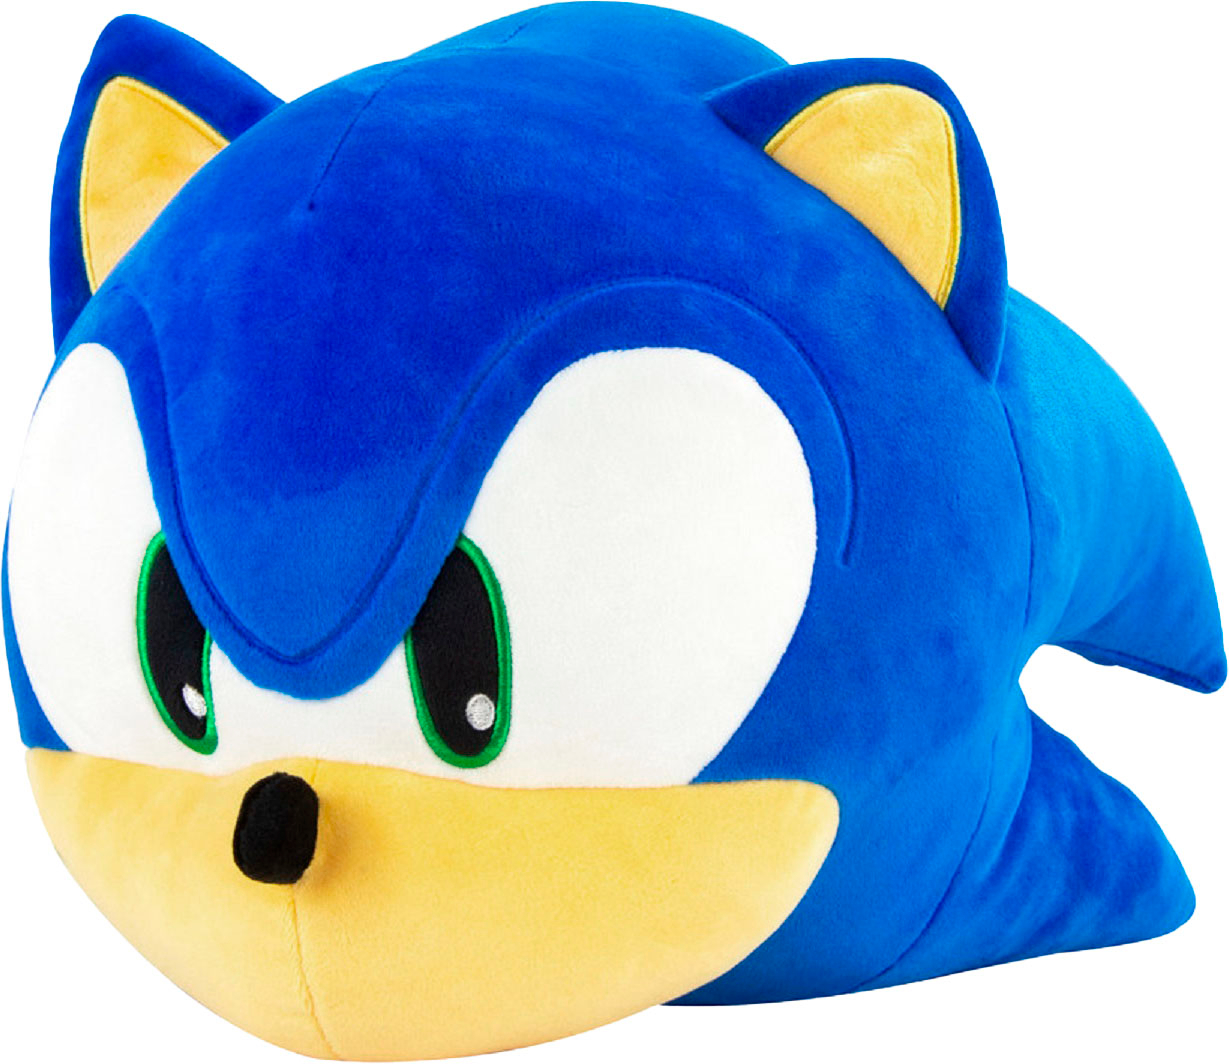 Sonic The Hedgehog Mega 15 inch Plush Stuffed Toy